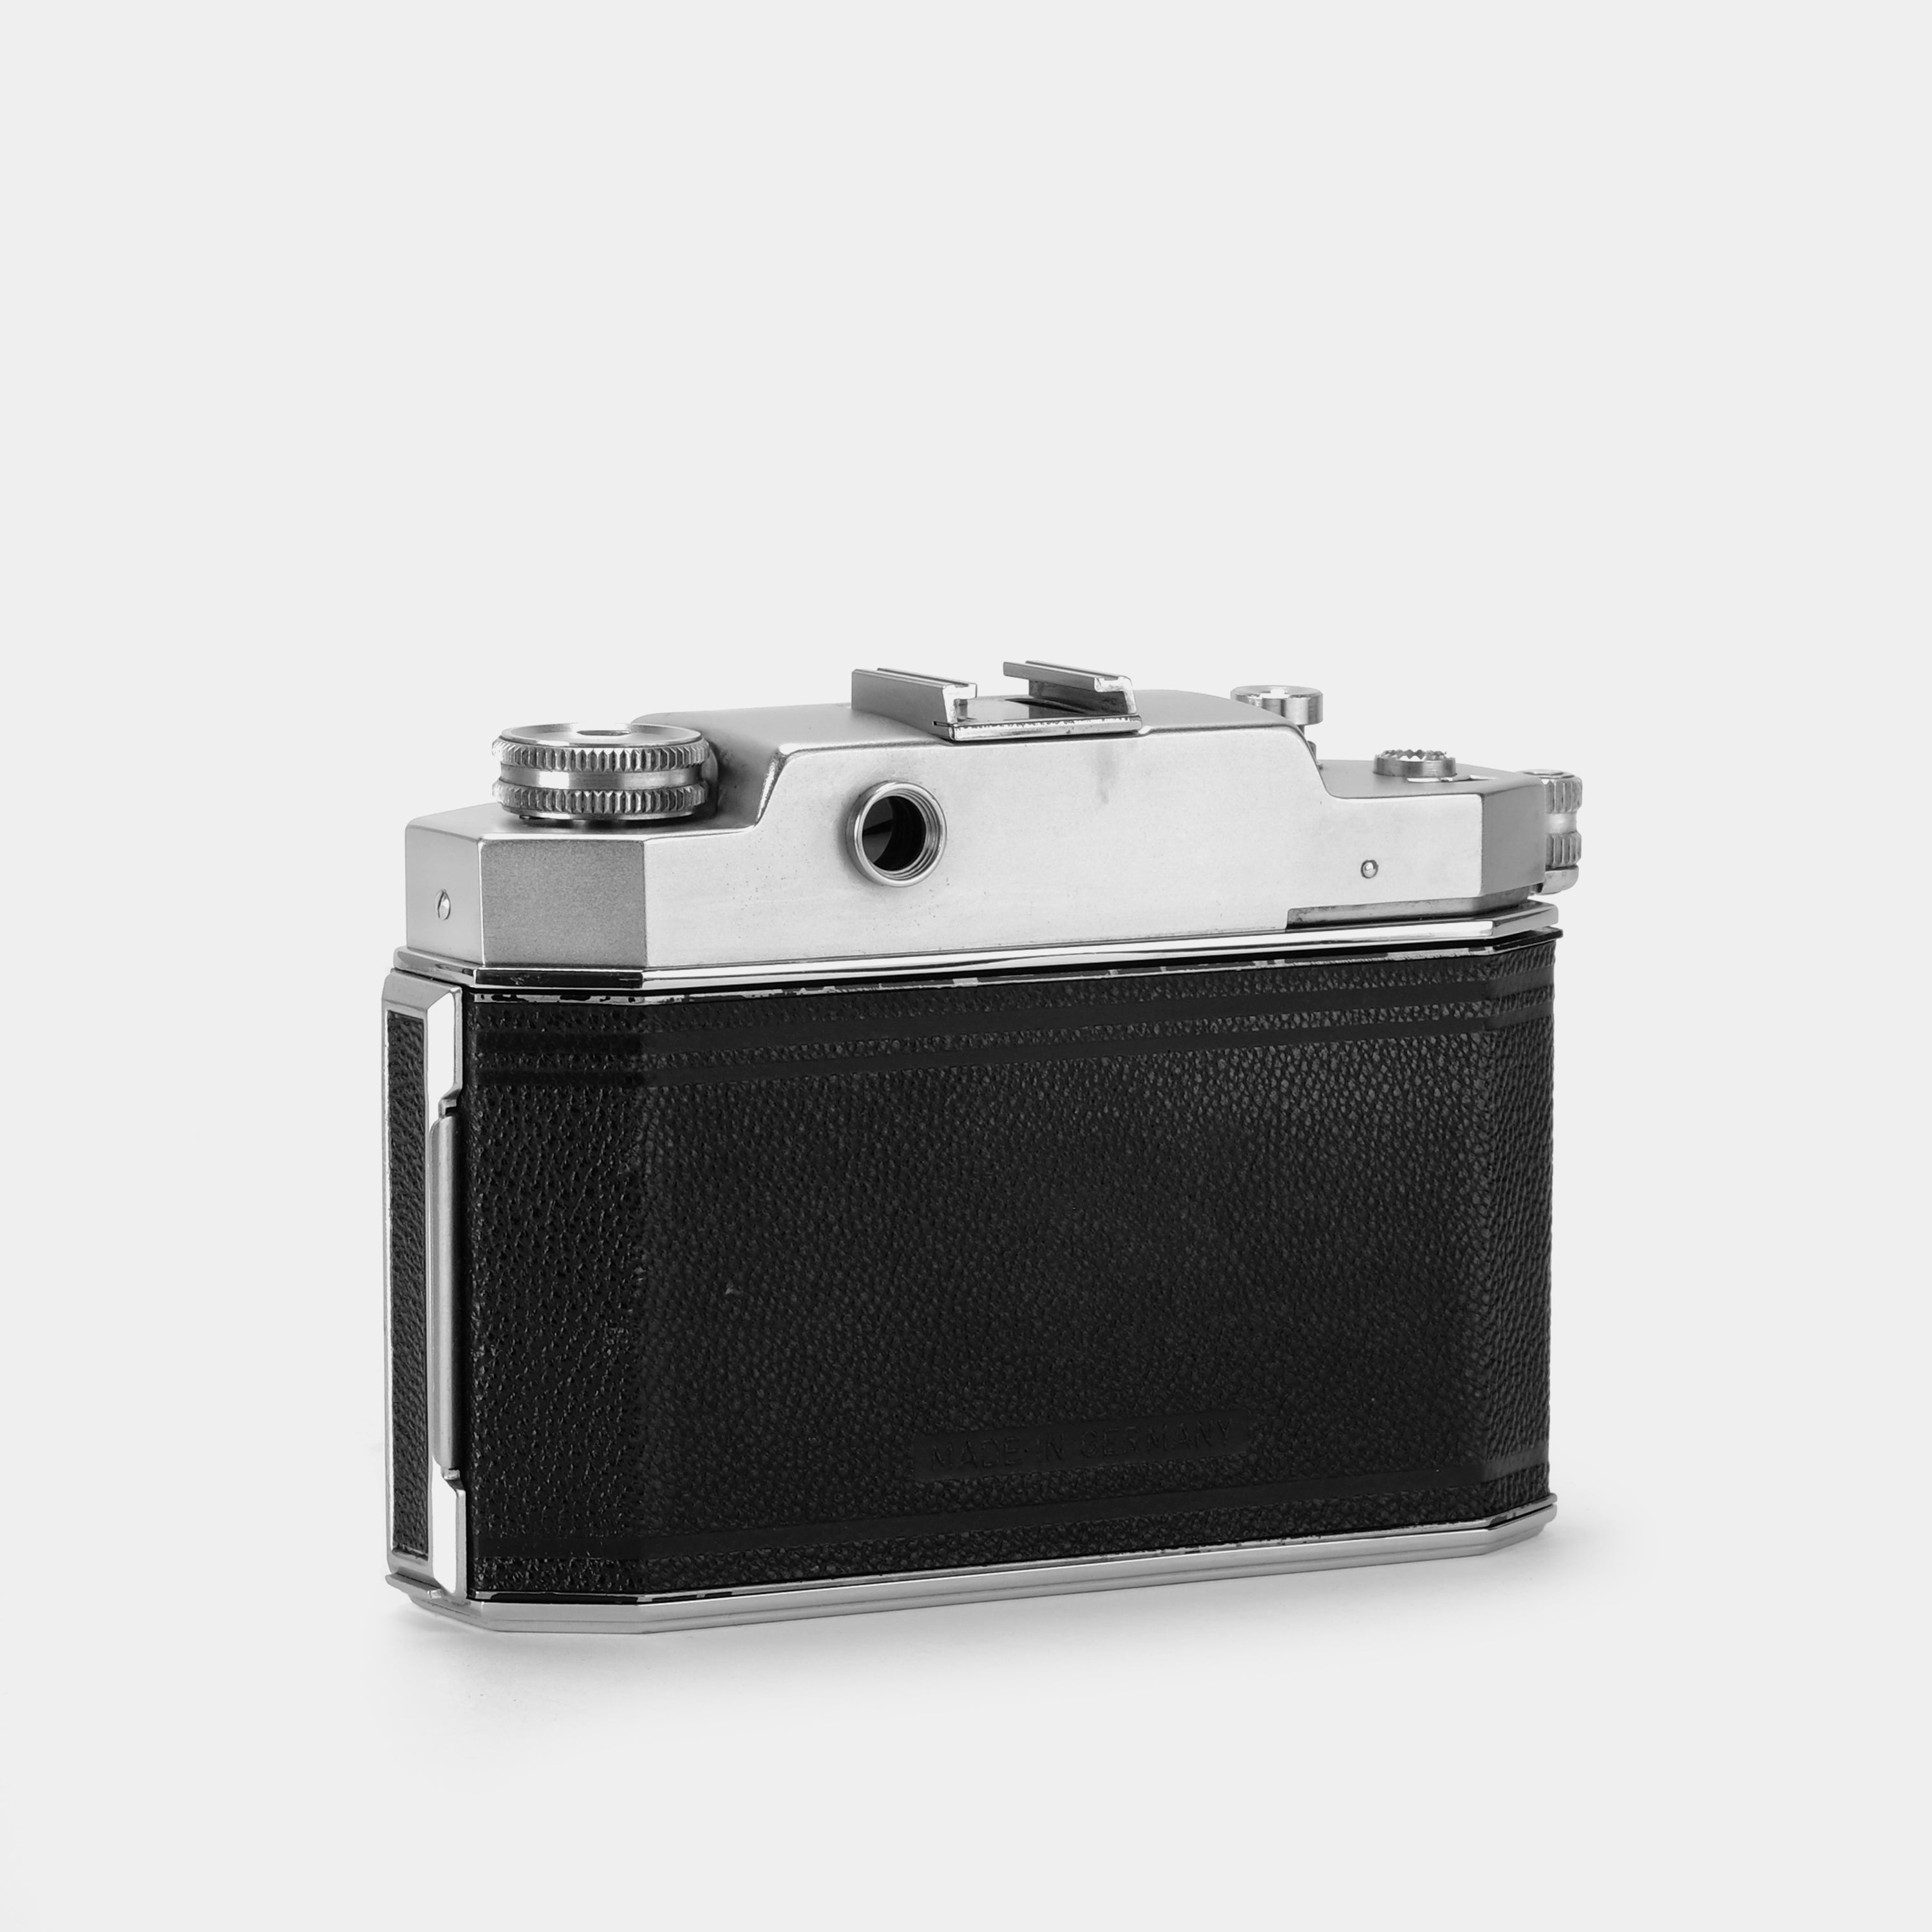 Afga Karat 35mm Rangefinder Film Camera